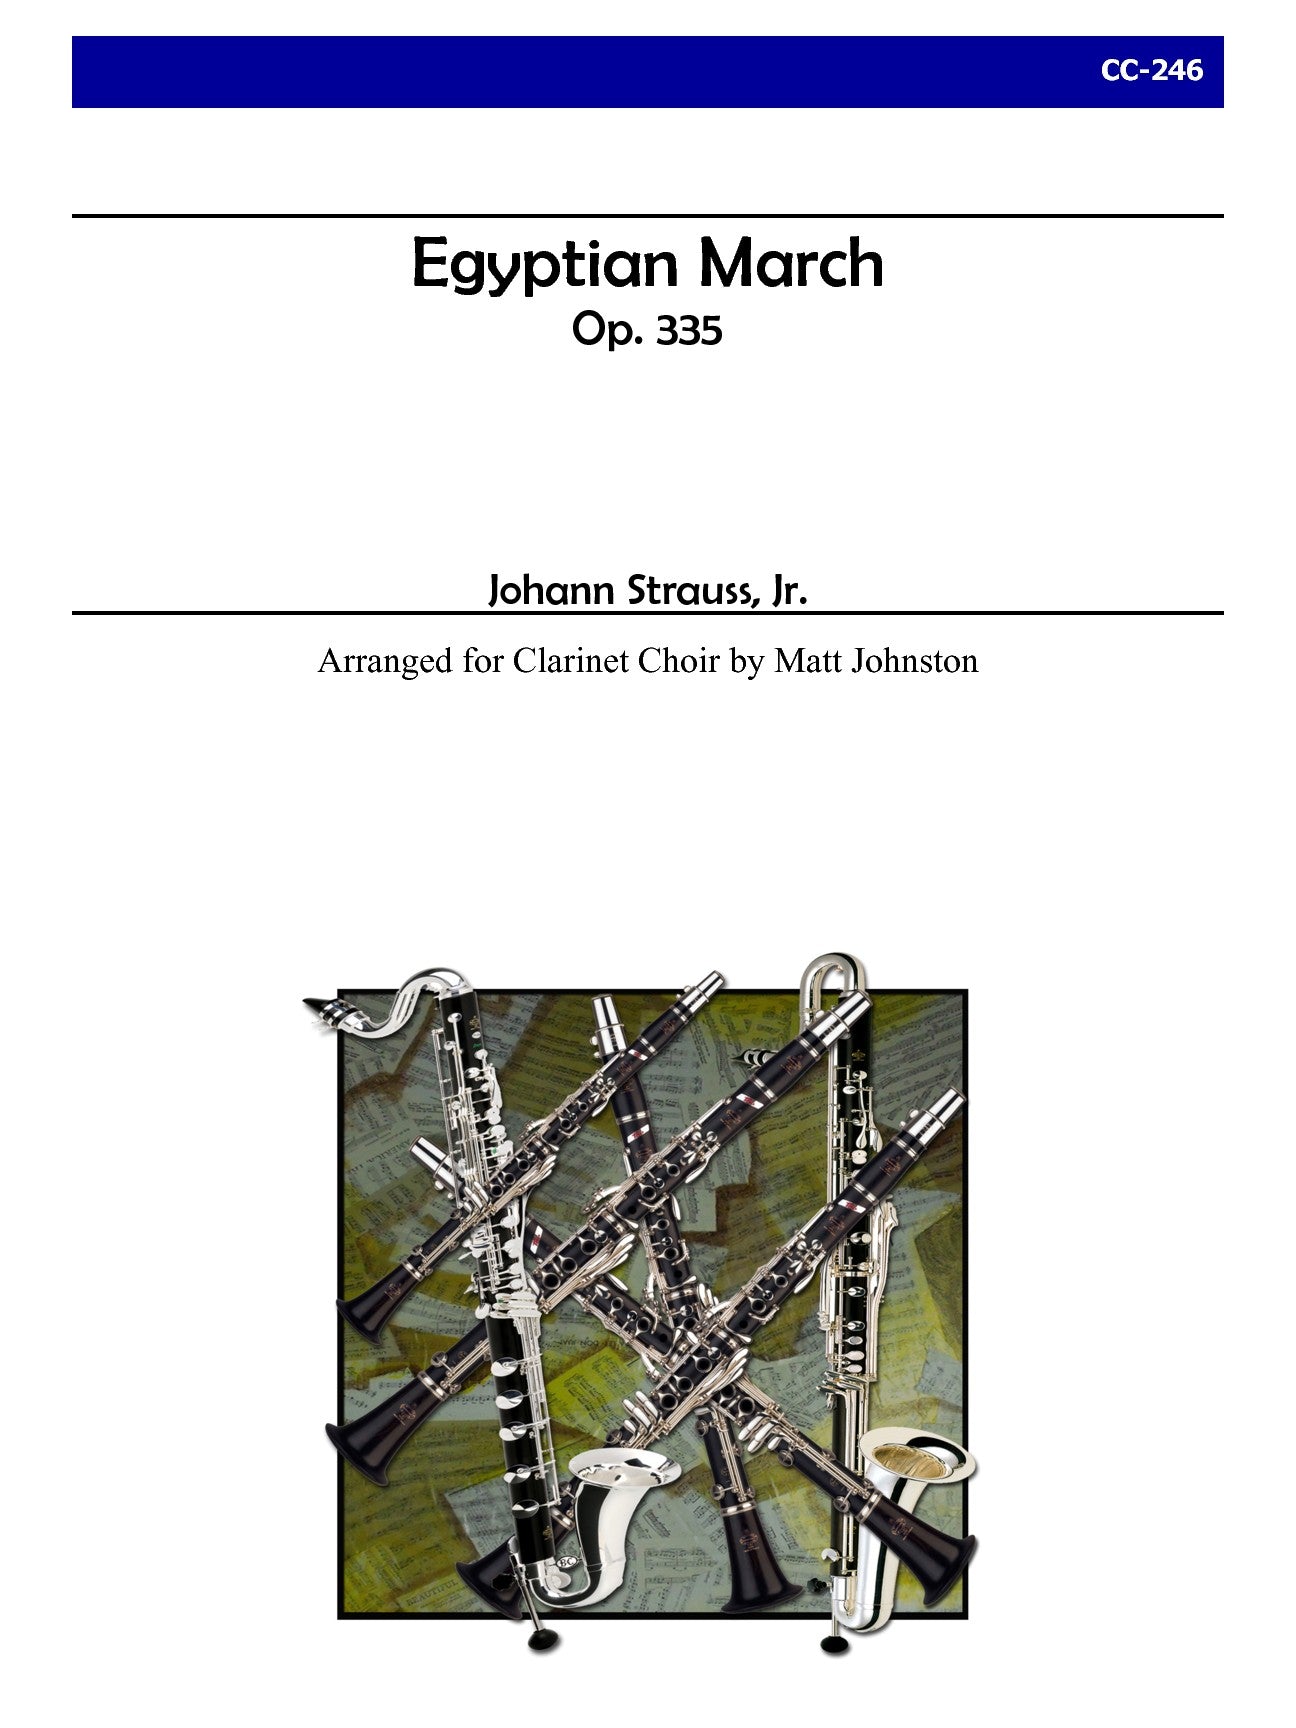 Strauss, Jr. (arr. Matt Johnston) - Egyptian March for Clarinet Choir